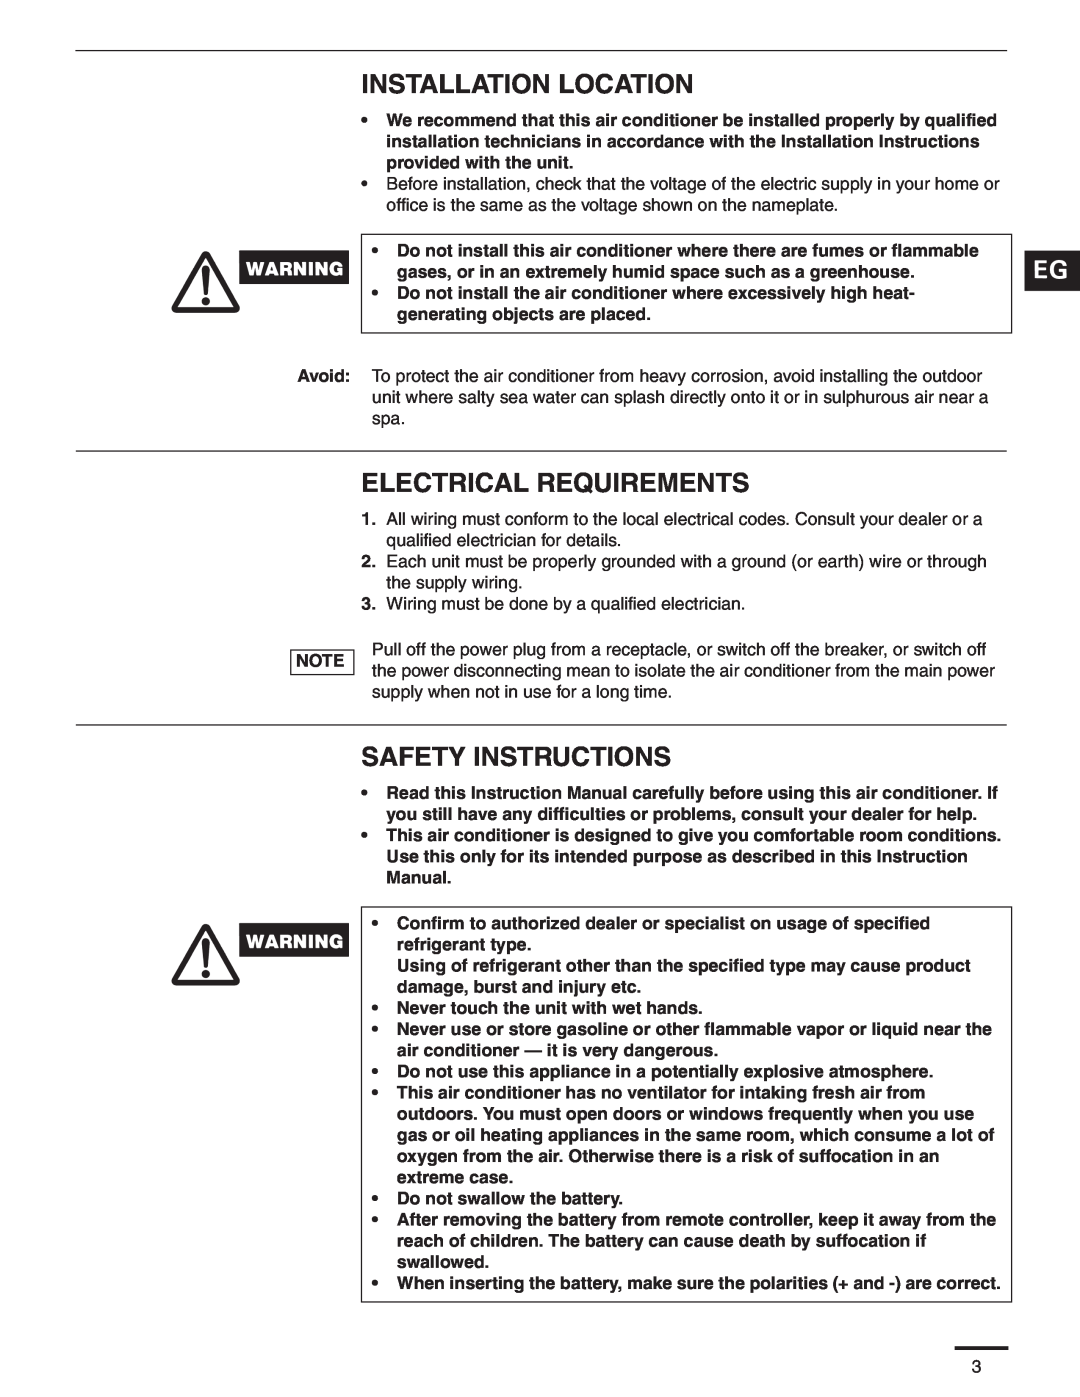 Panasonic CS-KS18NKU, CU-KS18NKU service manual Installation Location, Electrical Requirements, Safety Instructions 